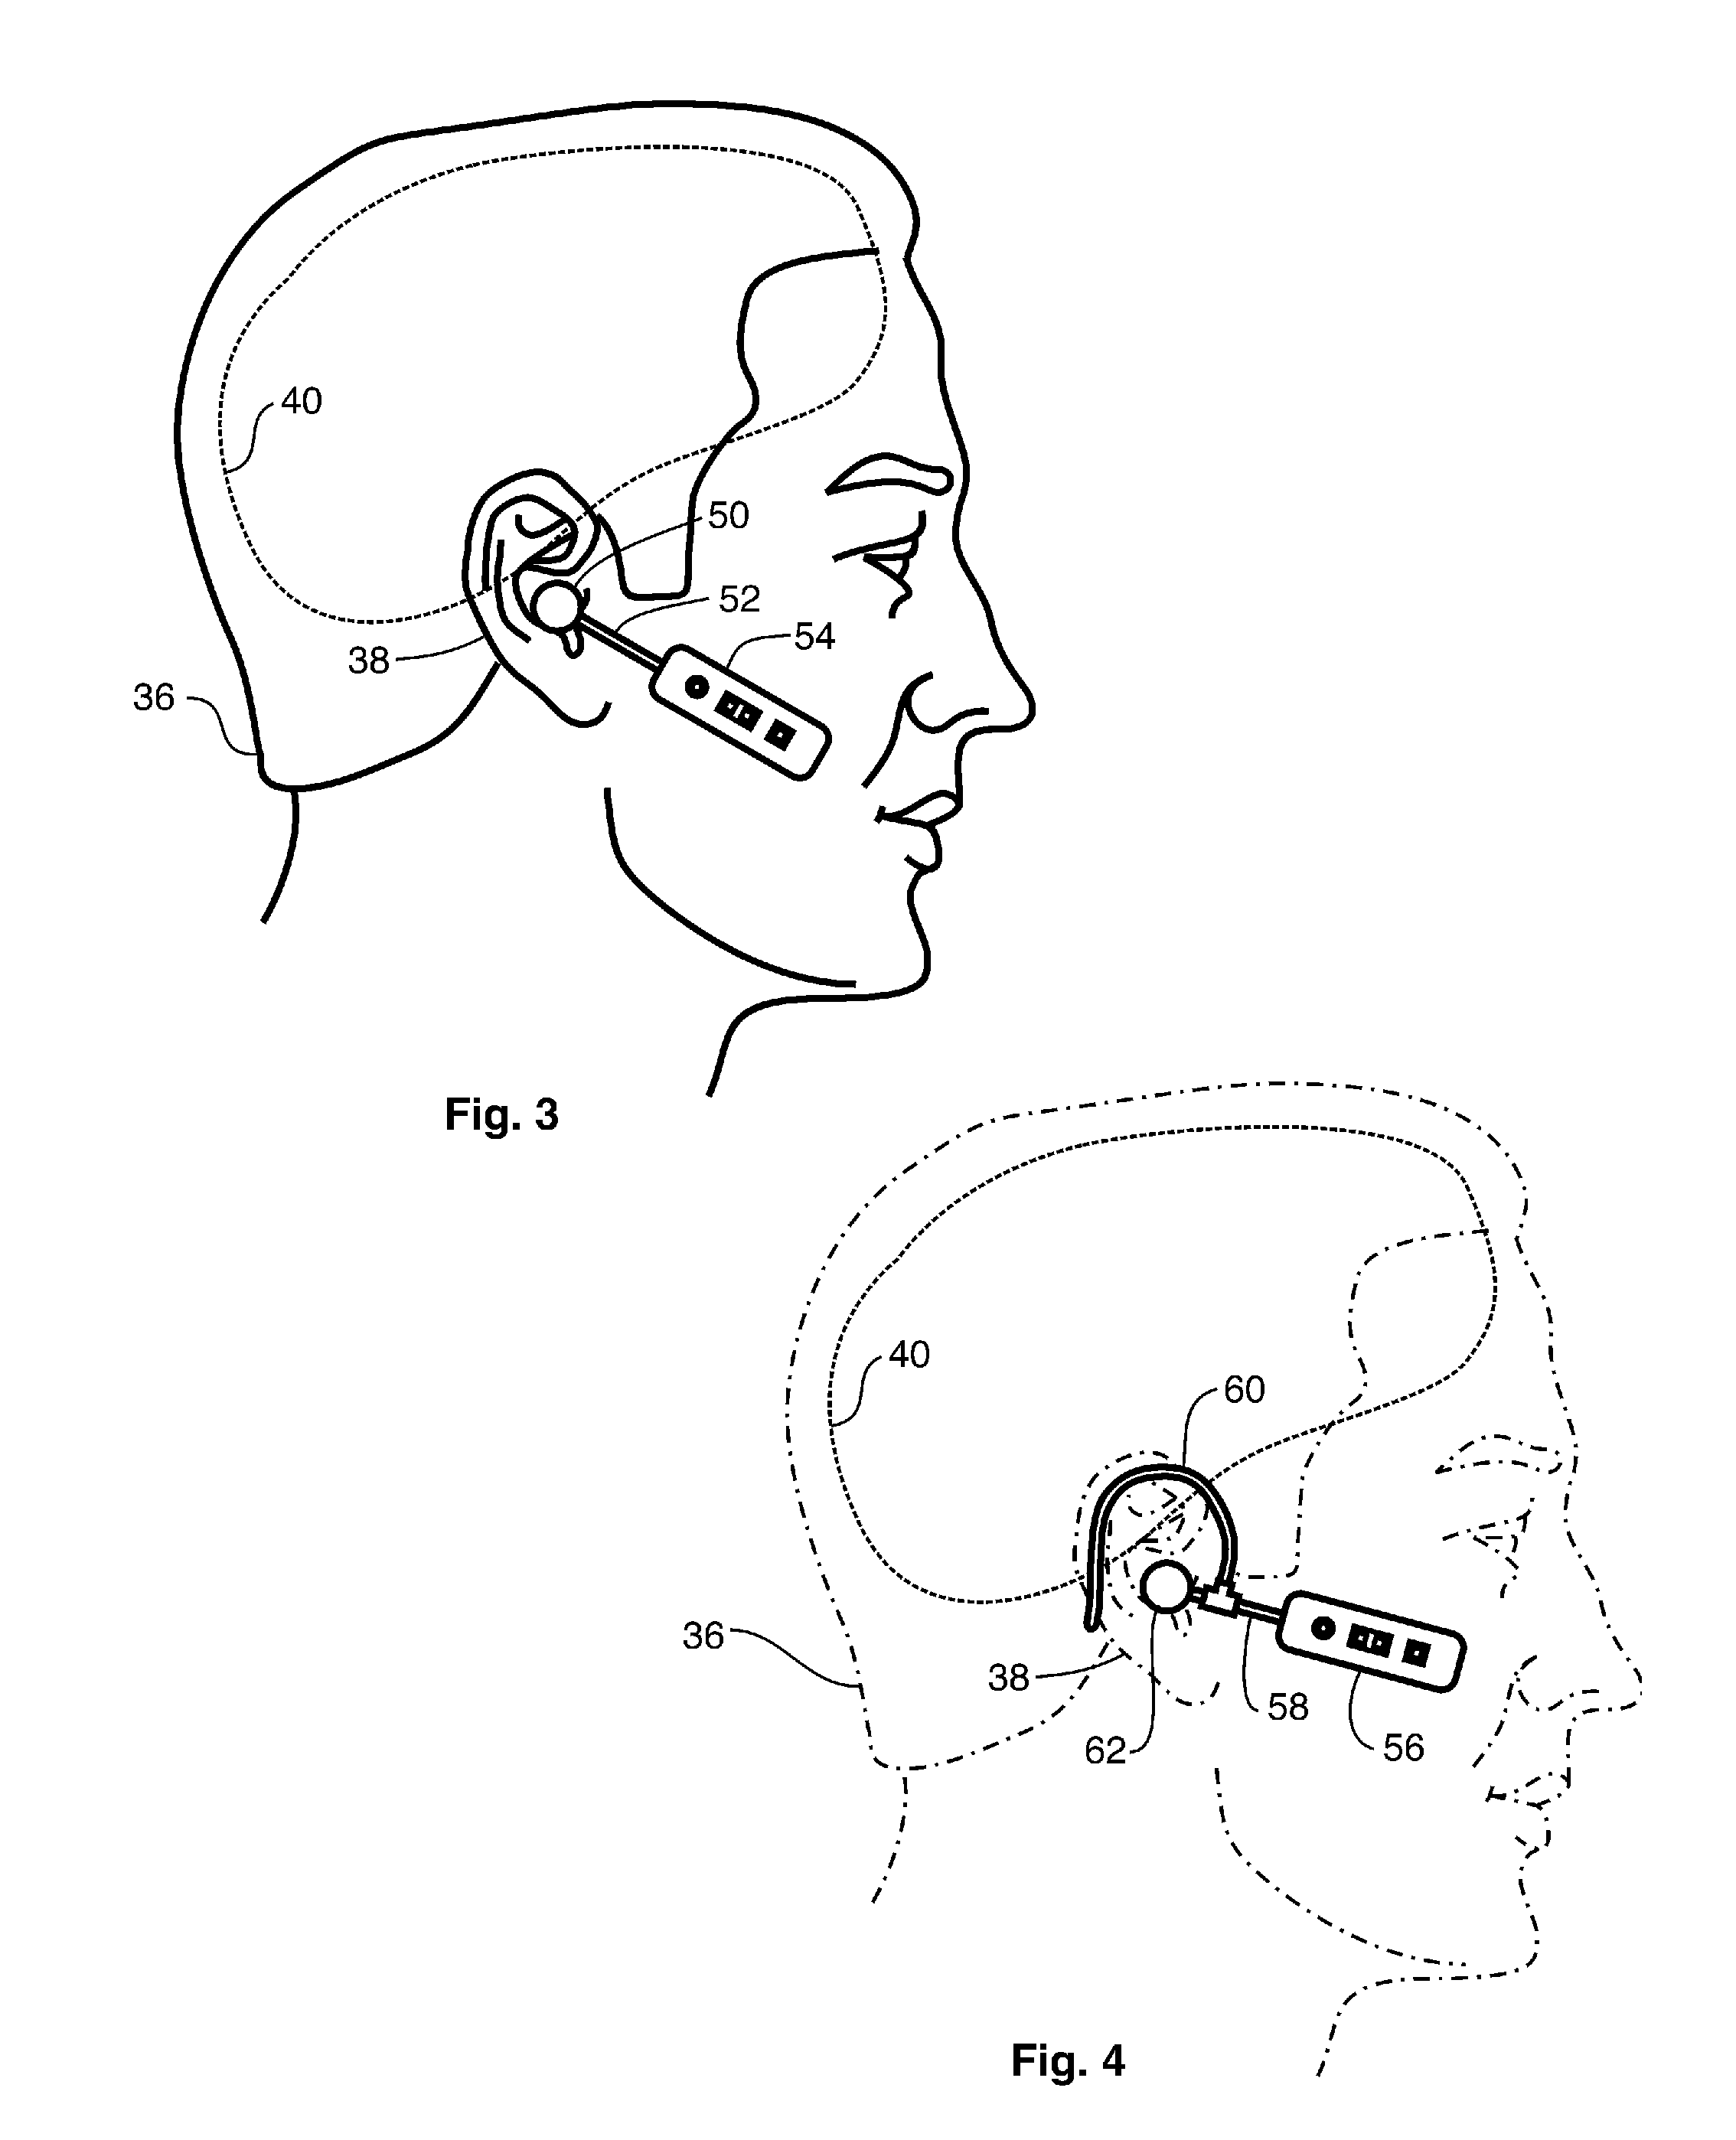 Wireless air tube headset